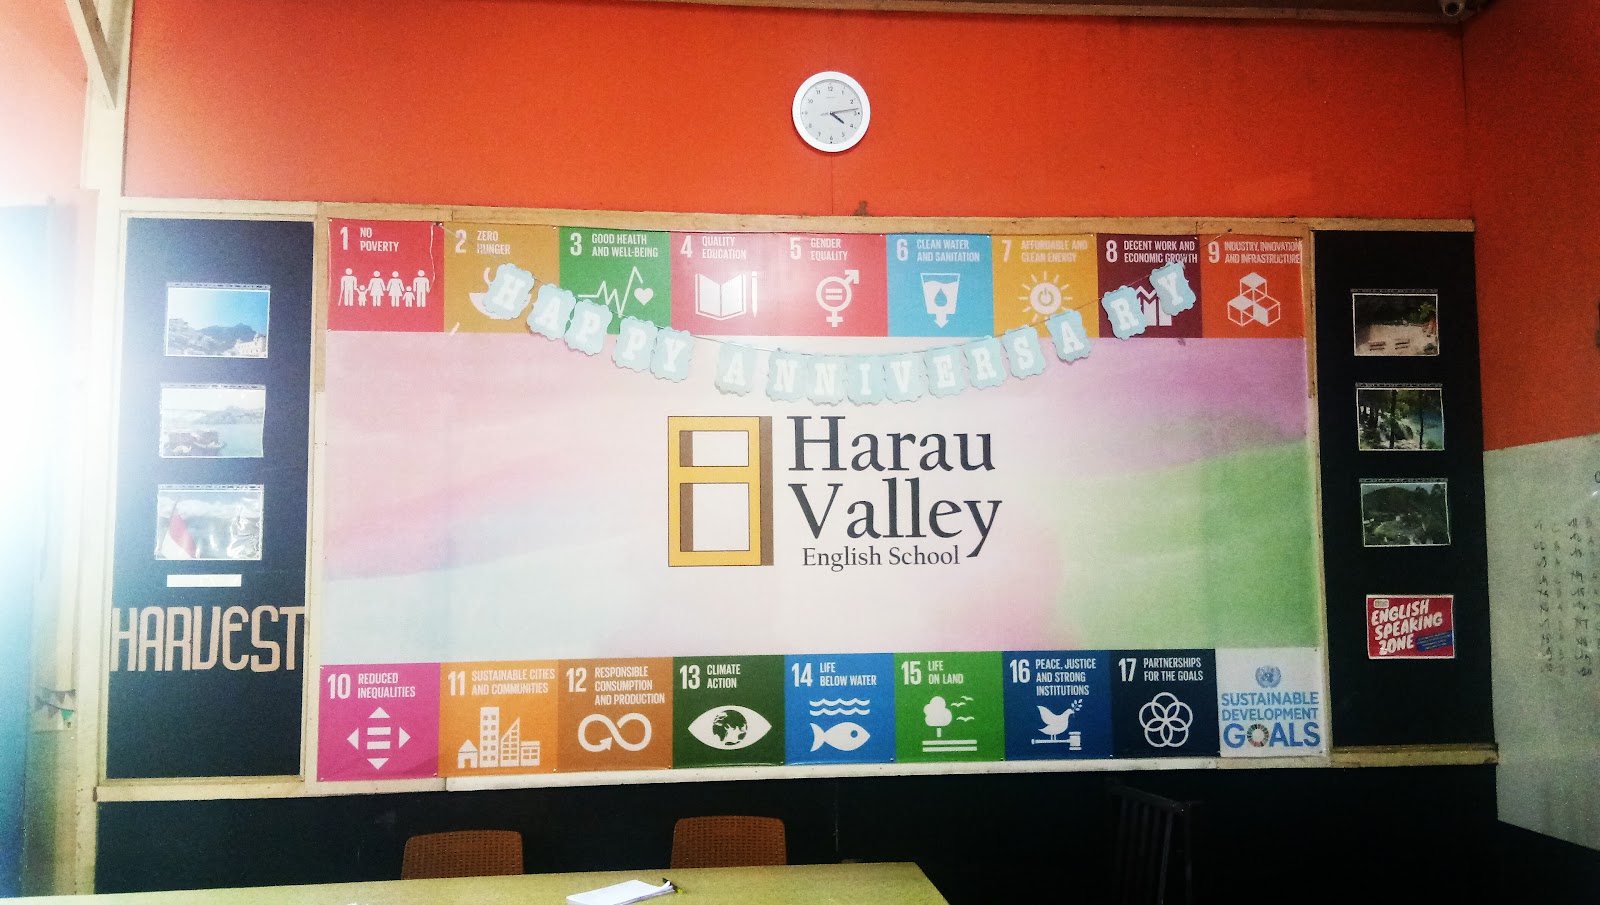 sustainable development goals sdgs tempat kursus bahasa Inggris kampung inggris harau valley english school harau.org harau.org